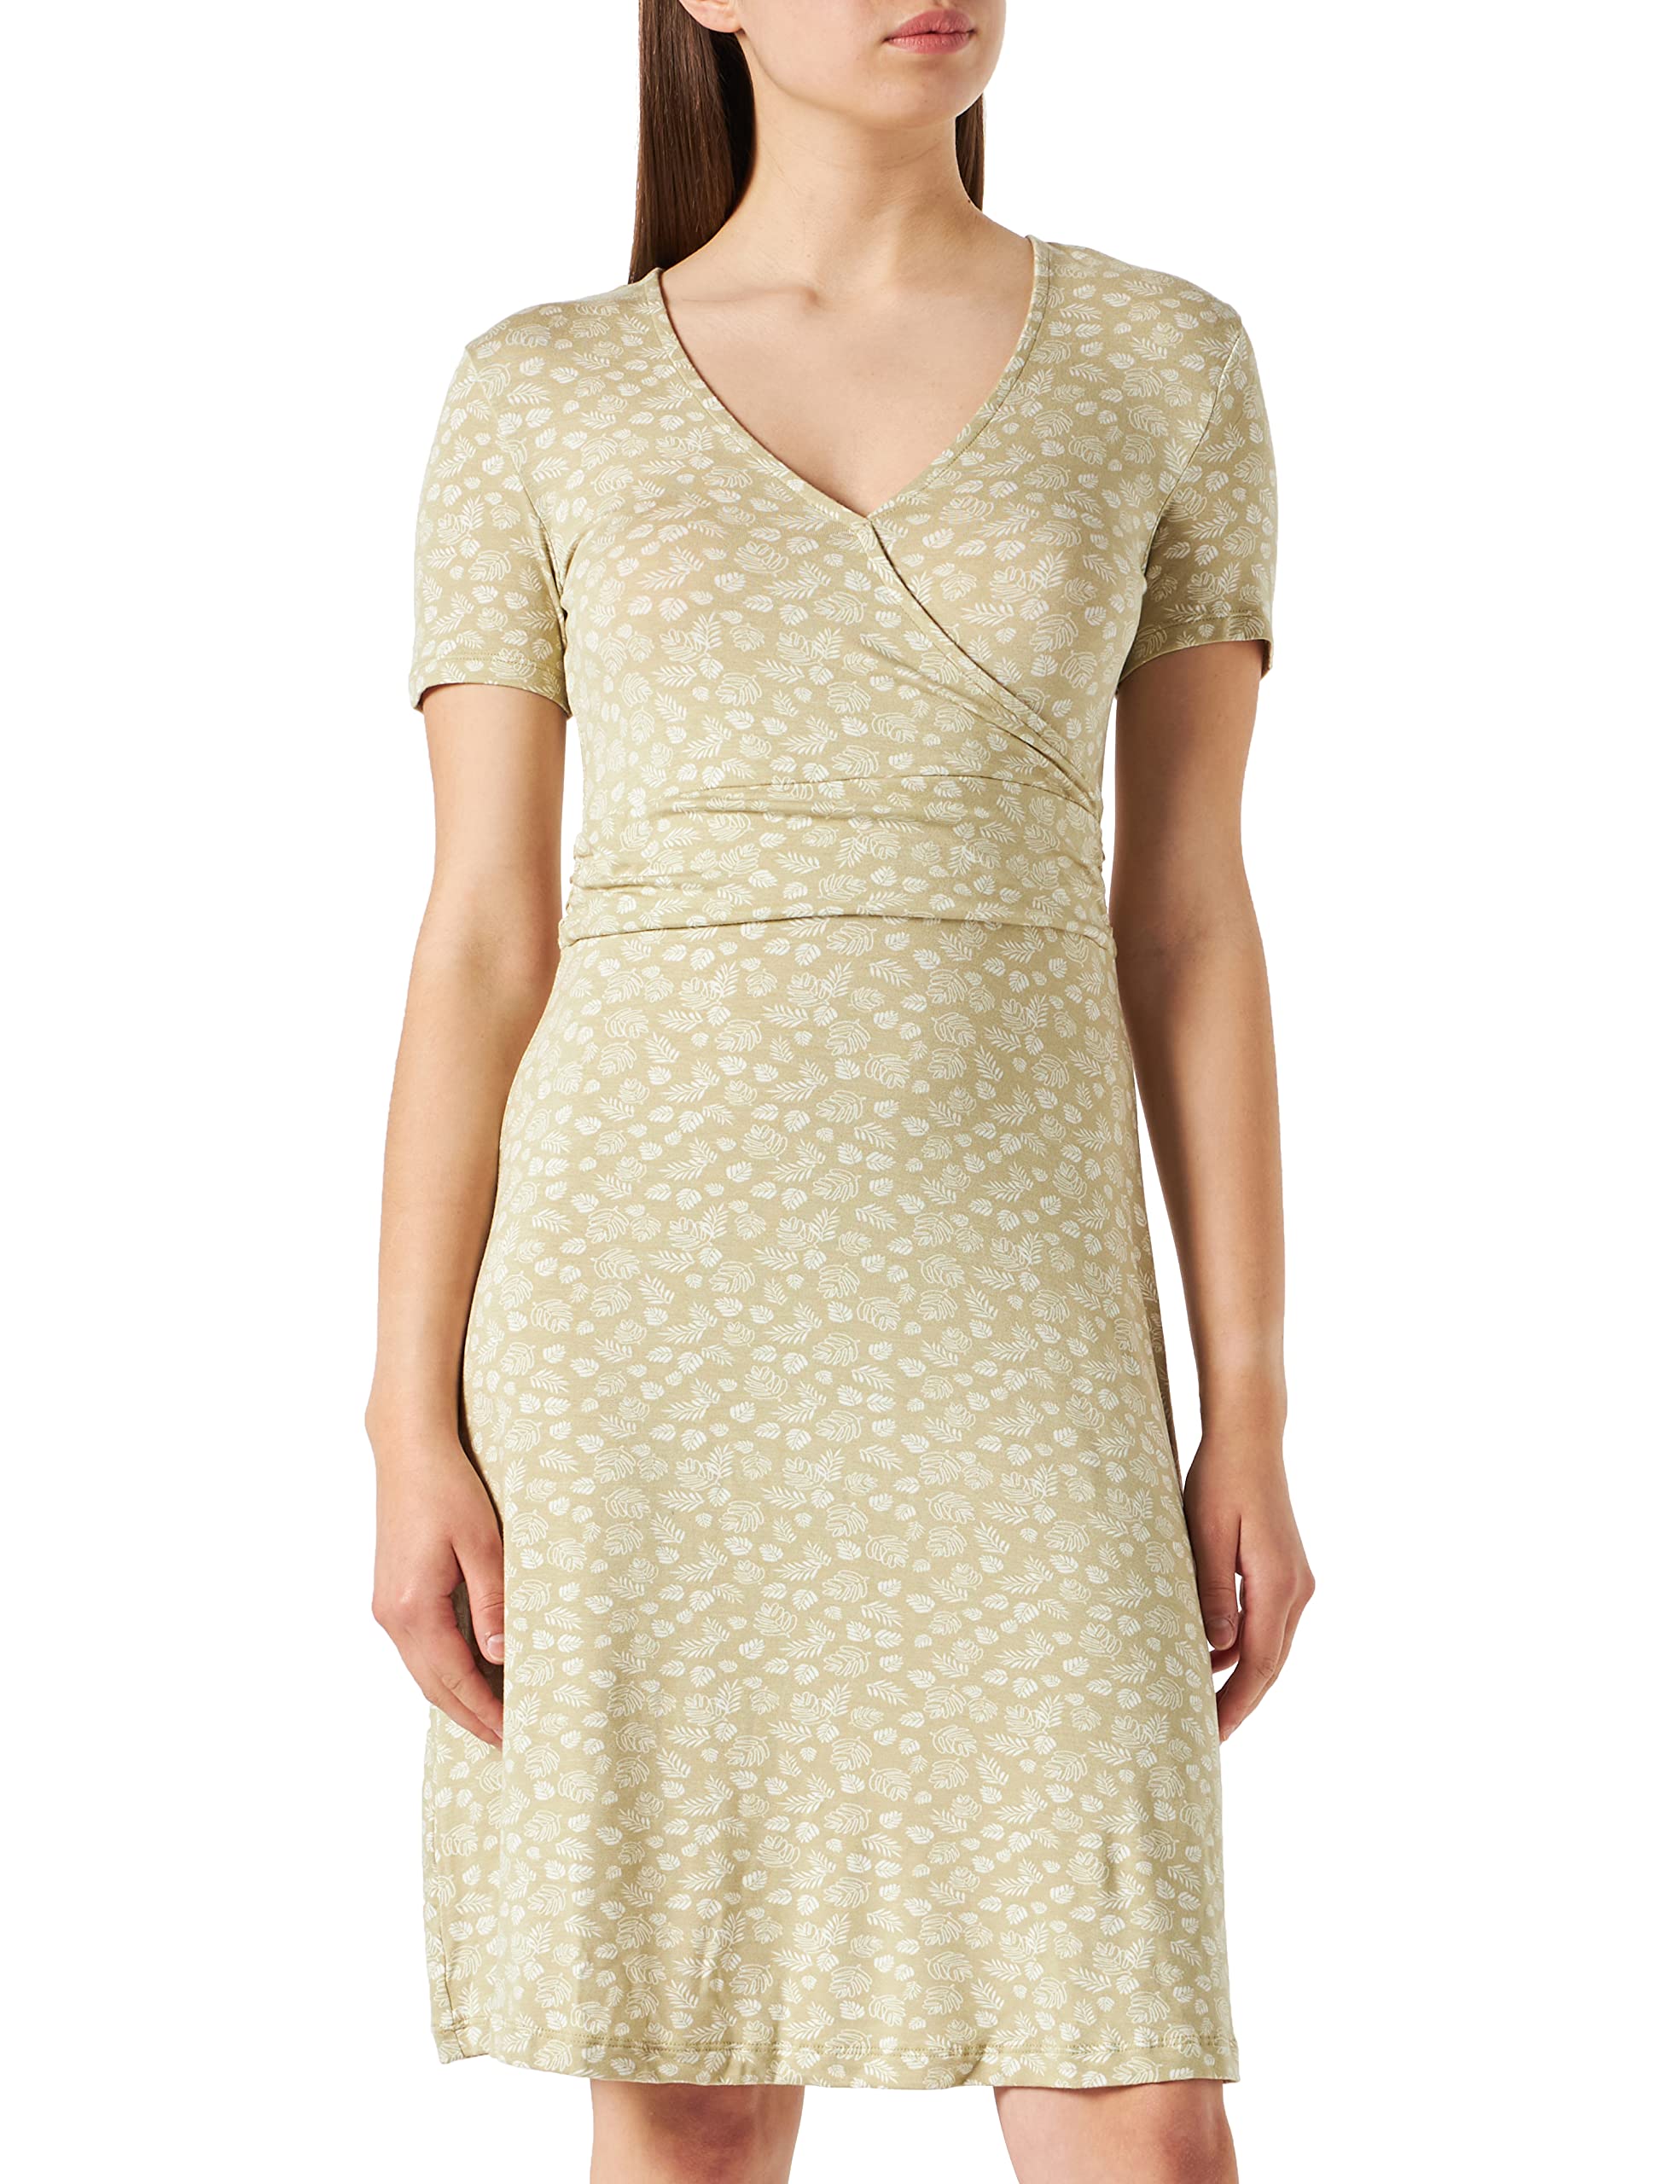 TOM TAILOR Damen Kleid in Wickeloptik 1032059, 29550 - Green Offwhite Leaf Design, 42